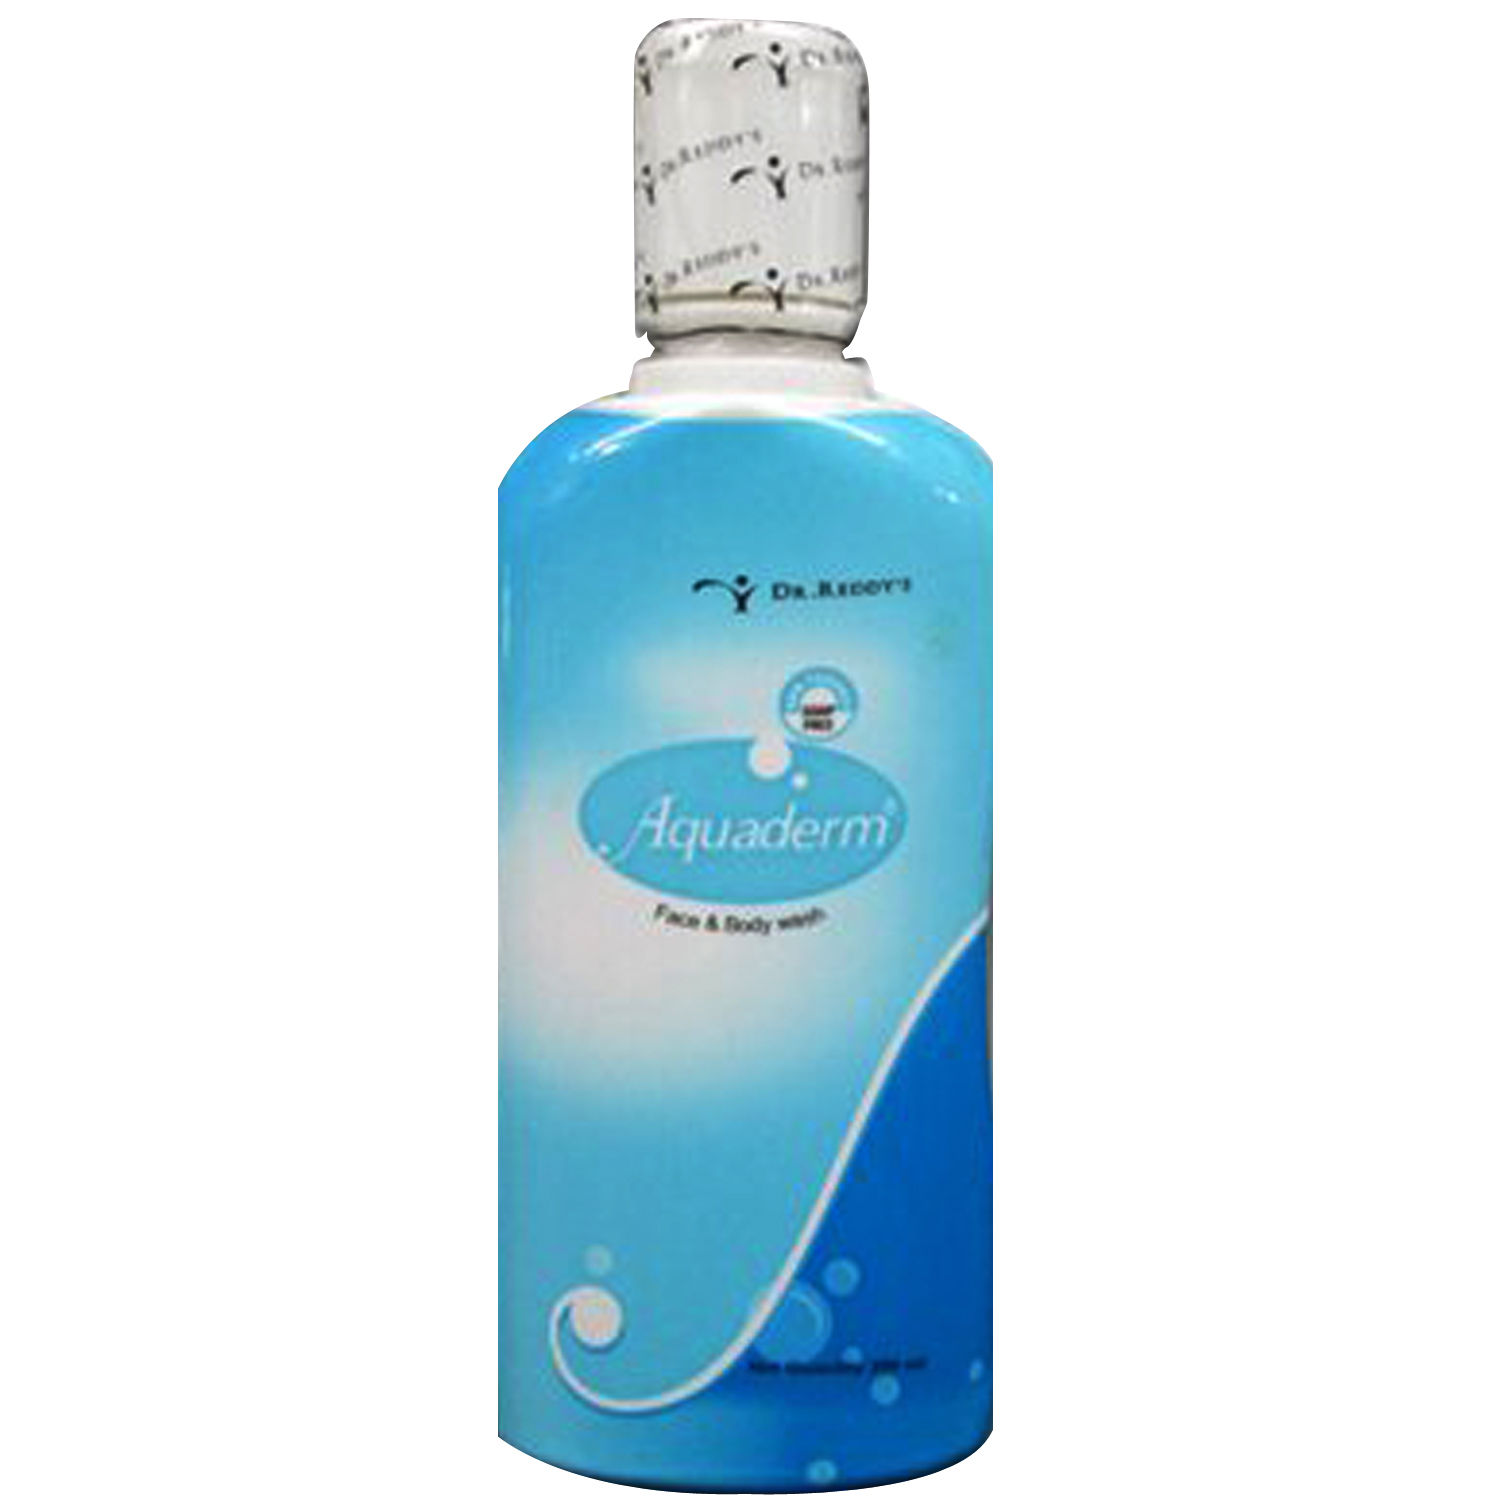 Buy Aquaderma Face & Body Wash 200ml Online